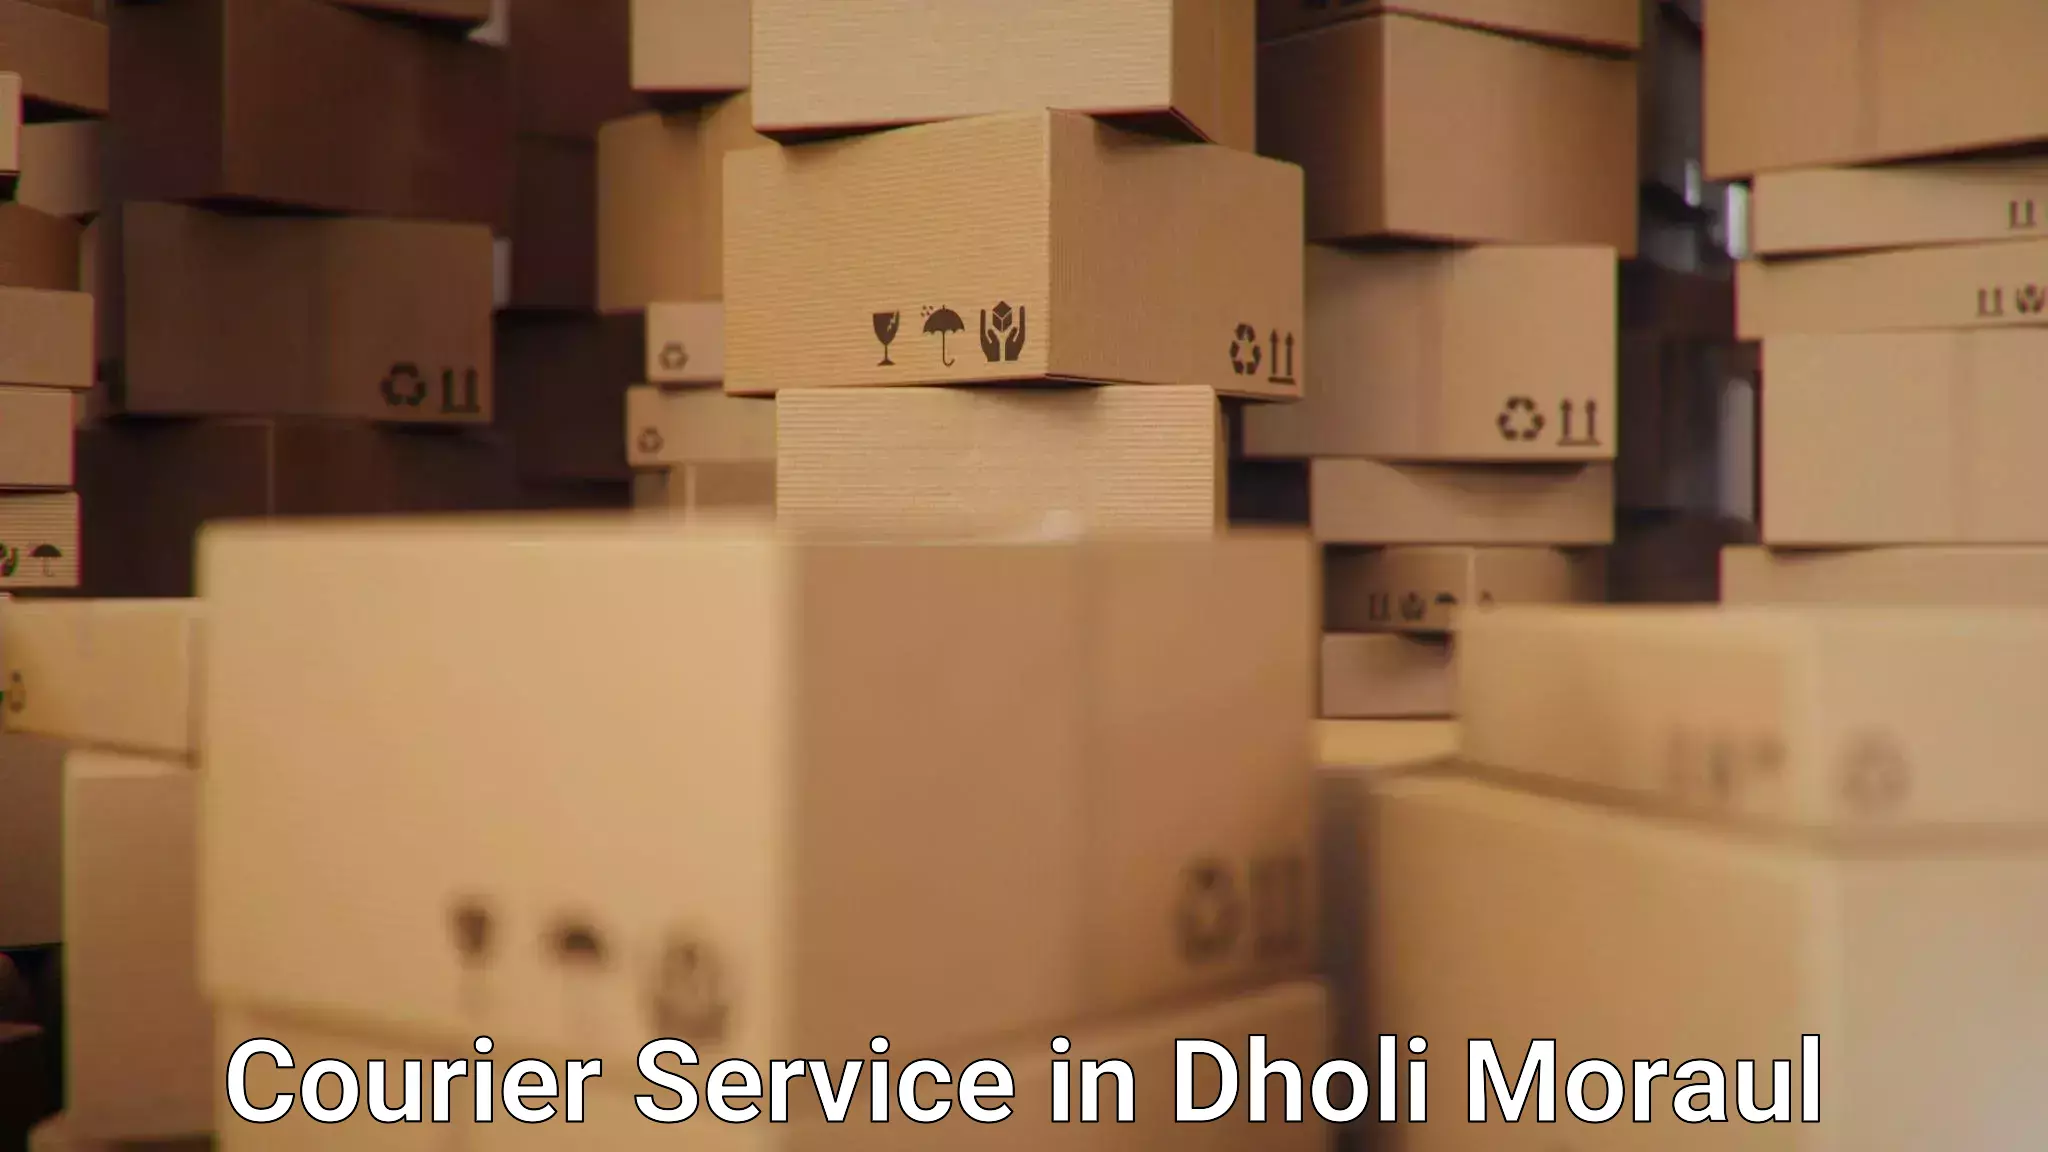 Efficient parcel delivery in Dholi Moraul